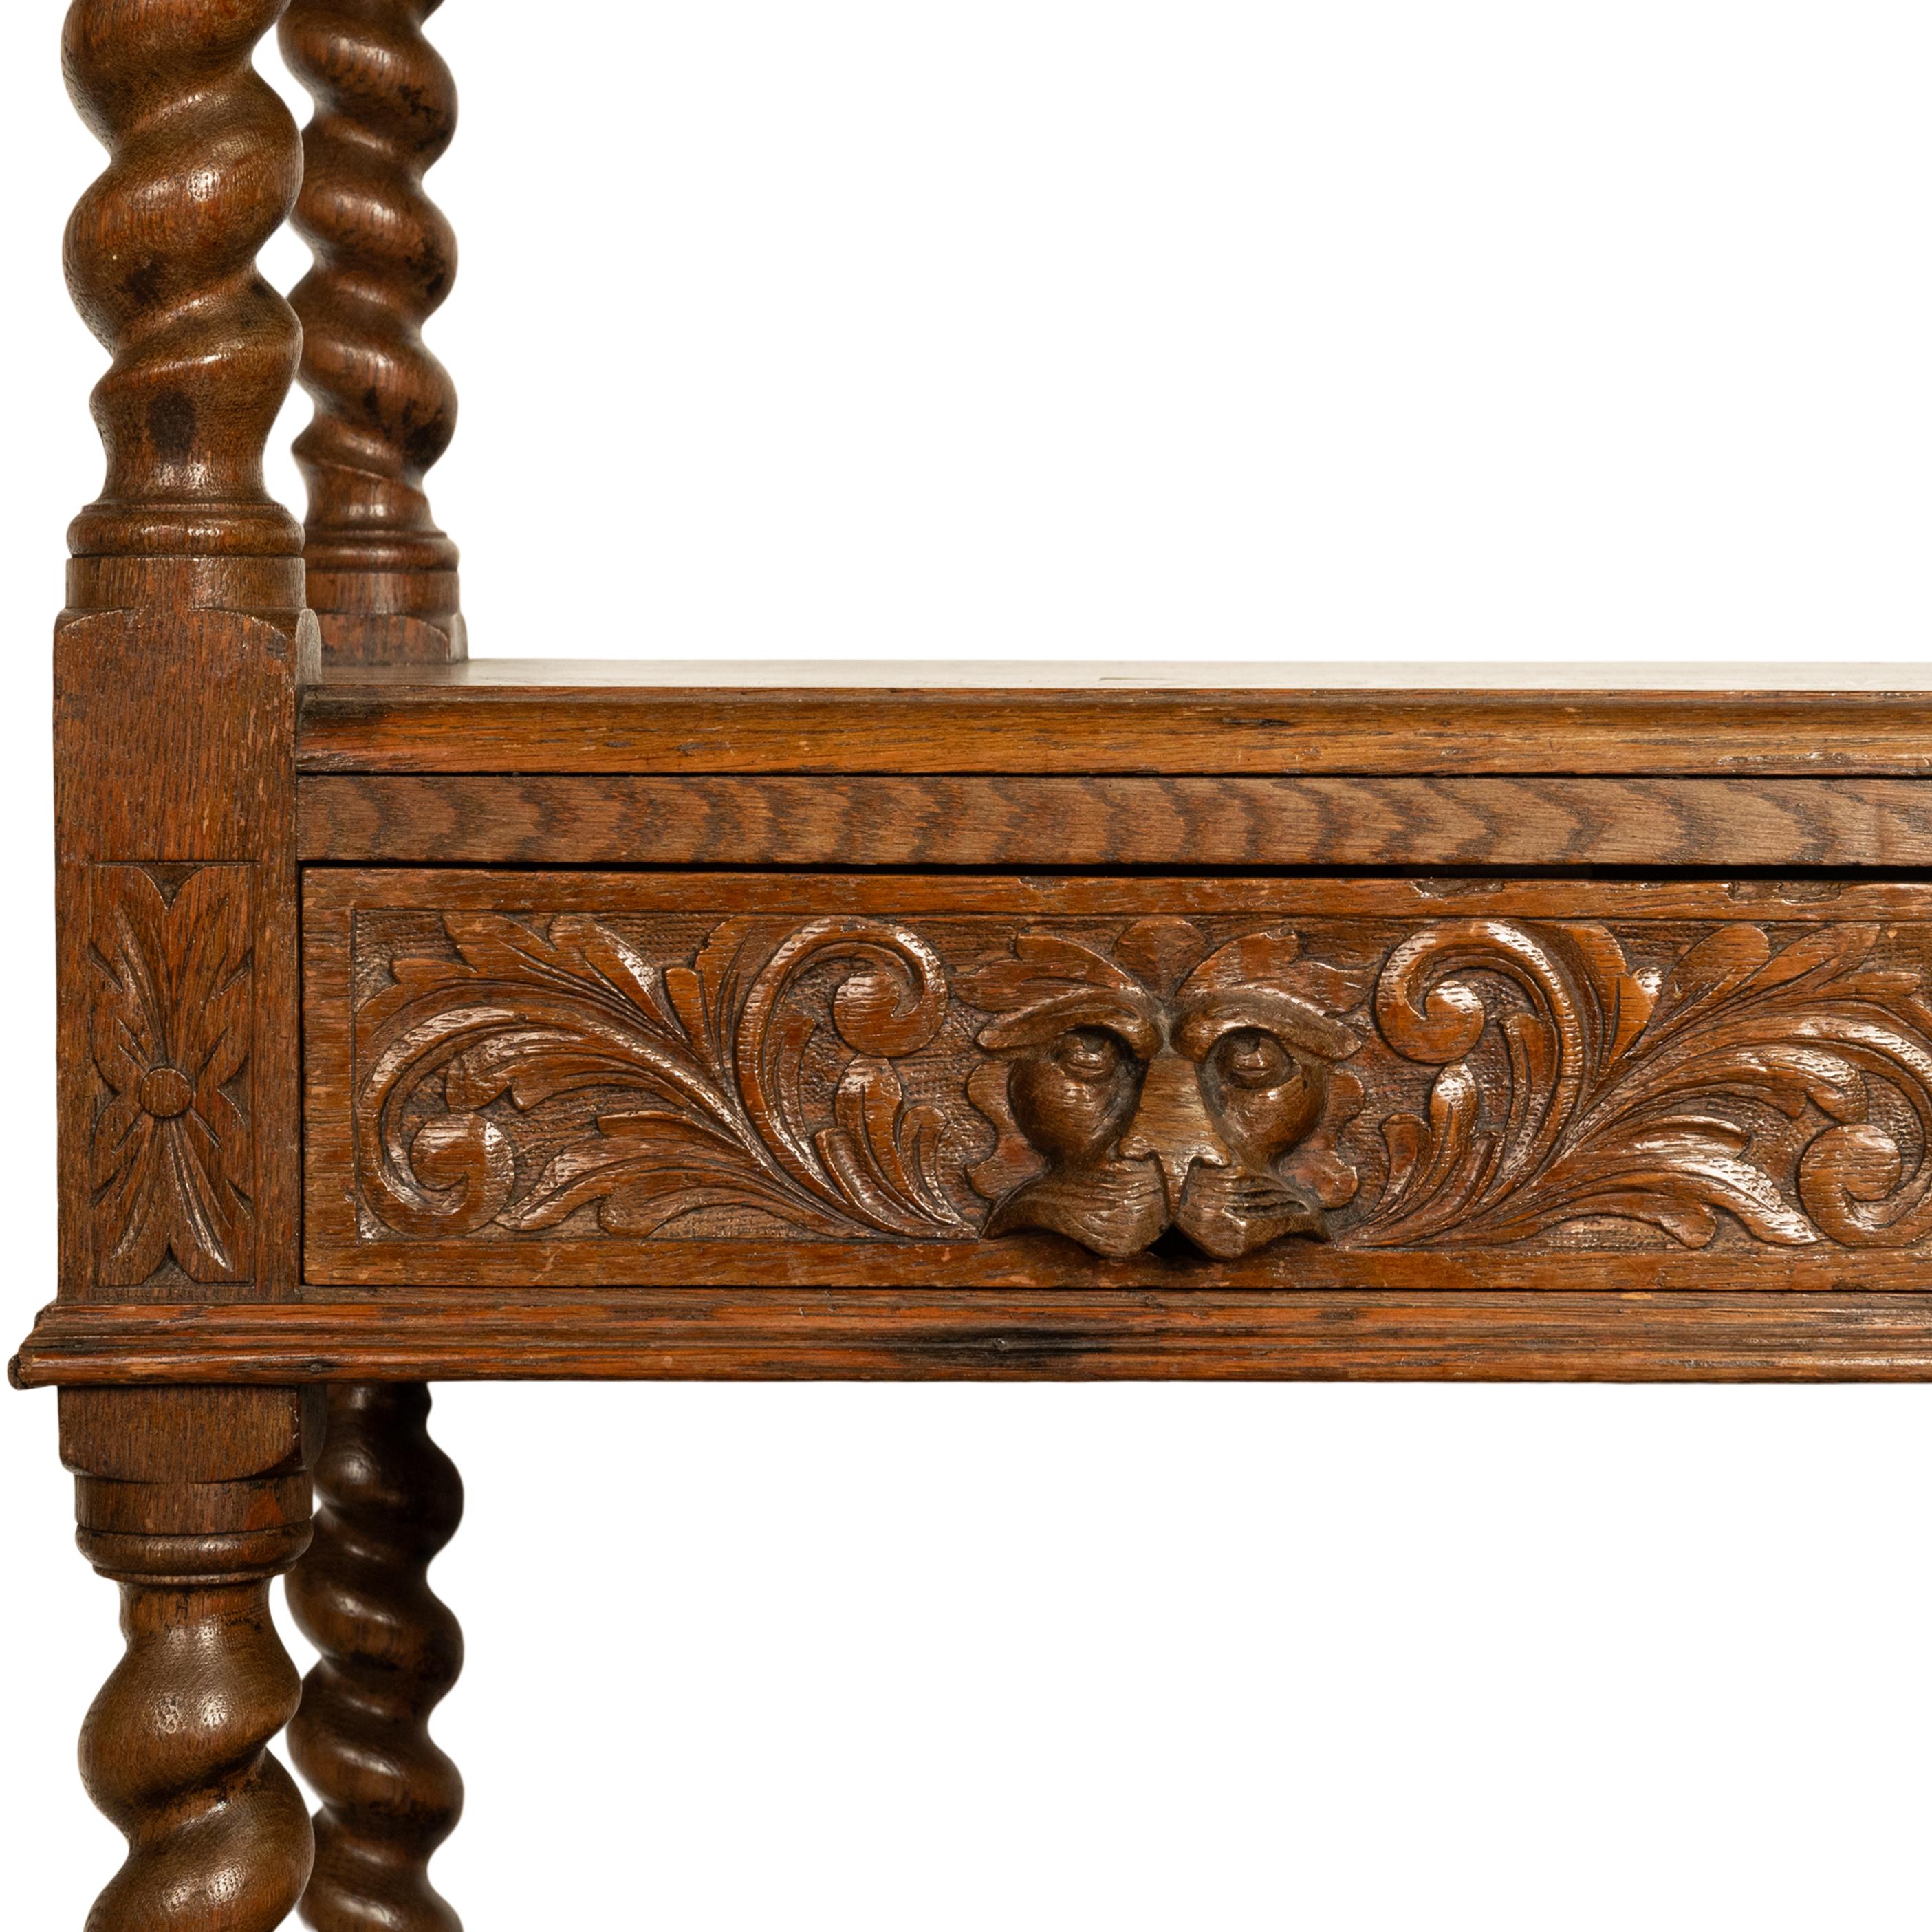 Antique French Renaissance Revival Carved Oak Barley Twist Server Buffet 1870 For Sale 10